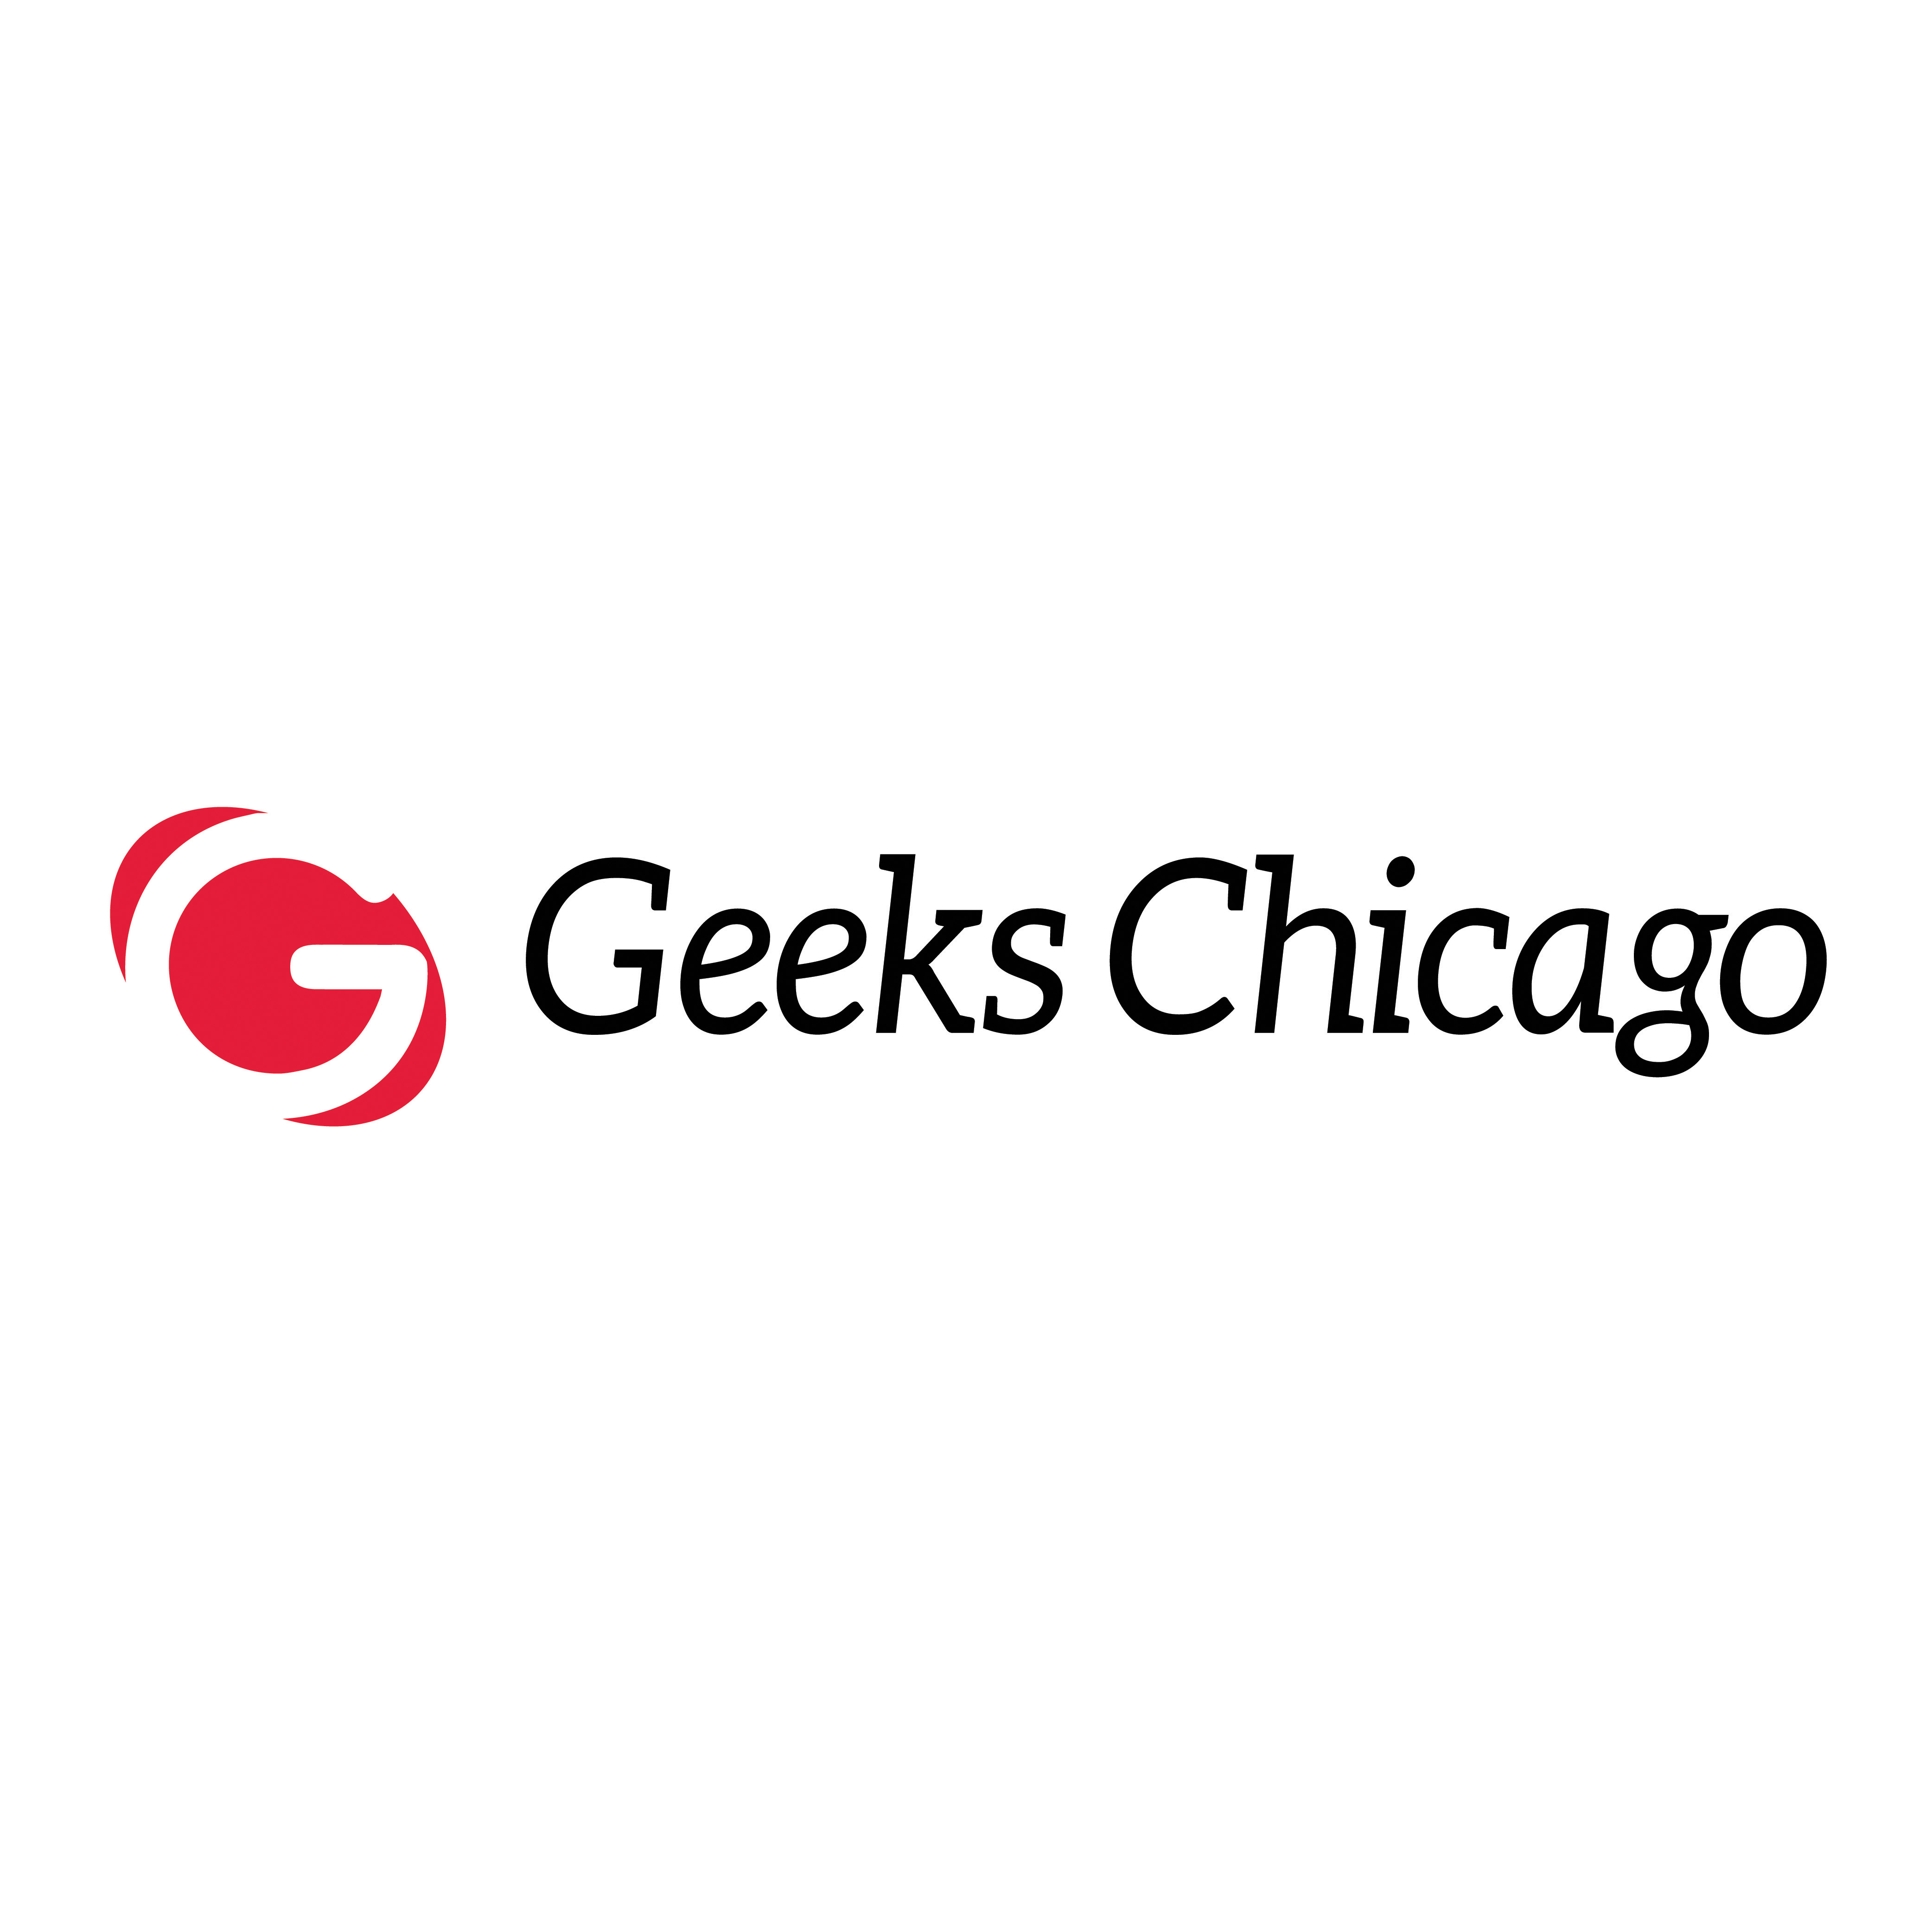 Geeks Chicago